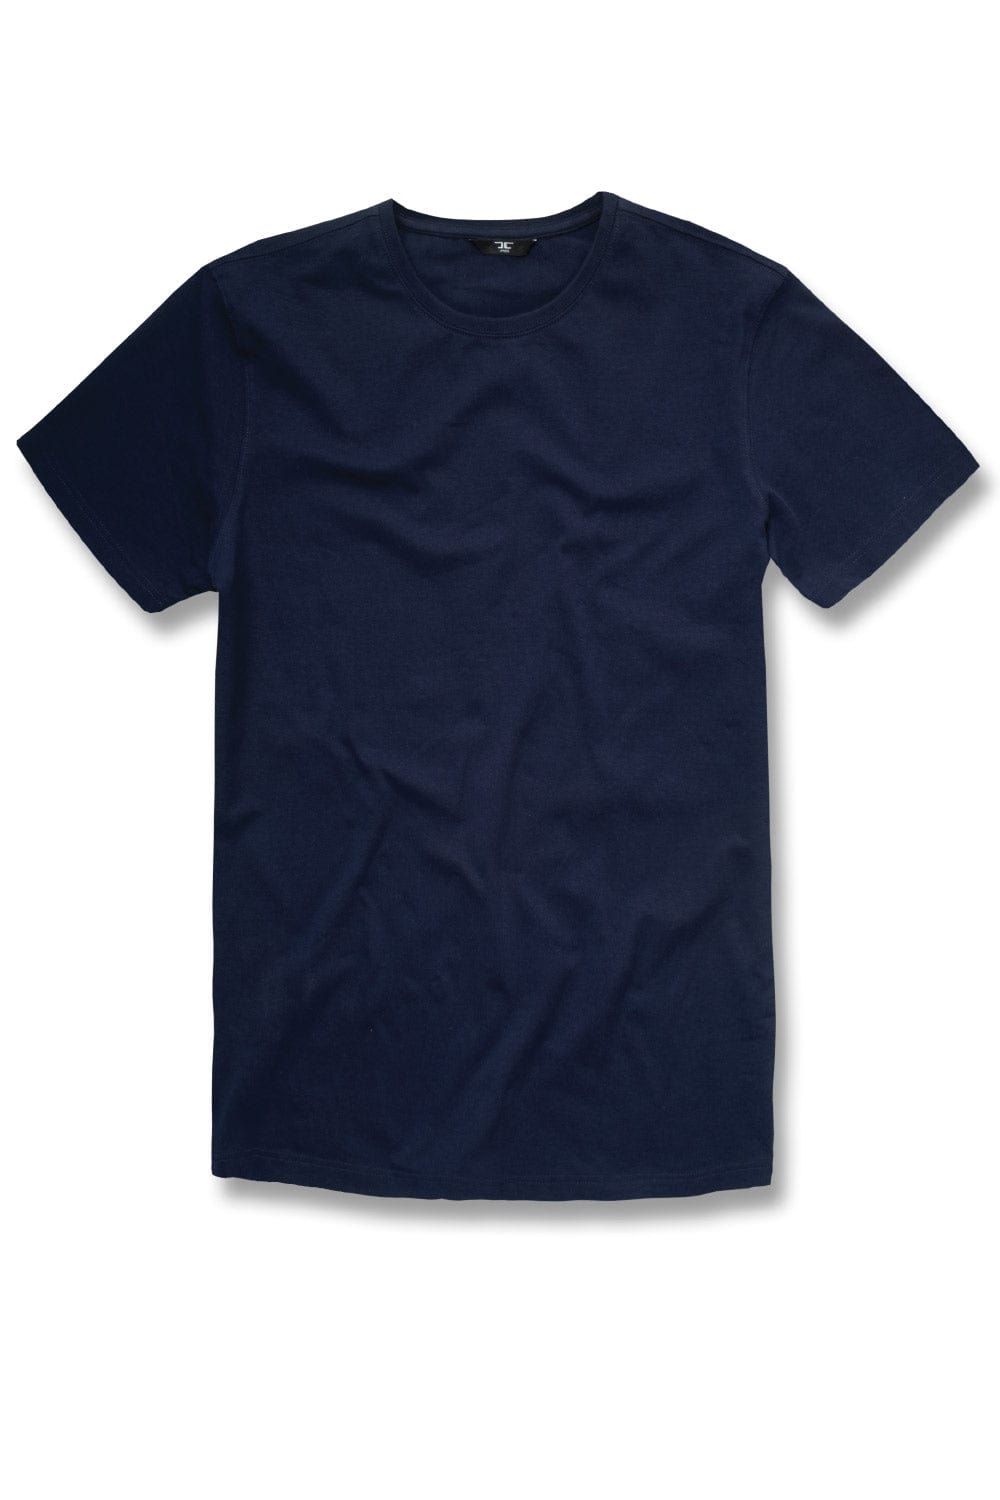 Jordan Craig Premium Crewneck T-Shirt Navy / S